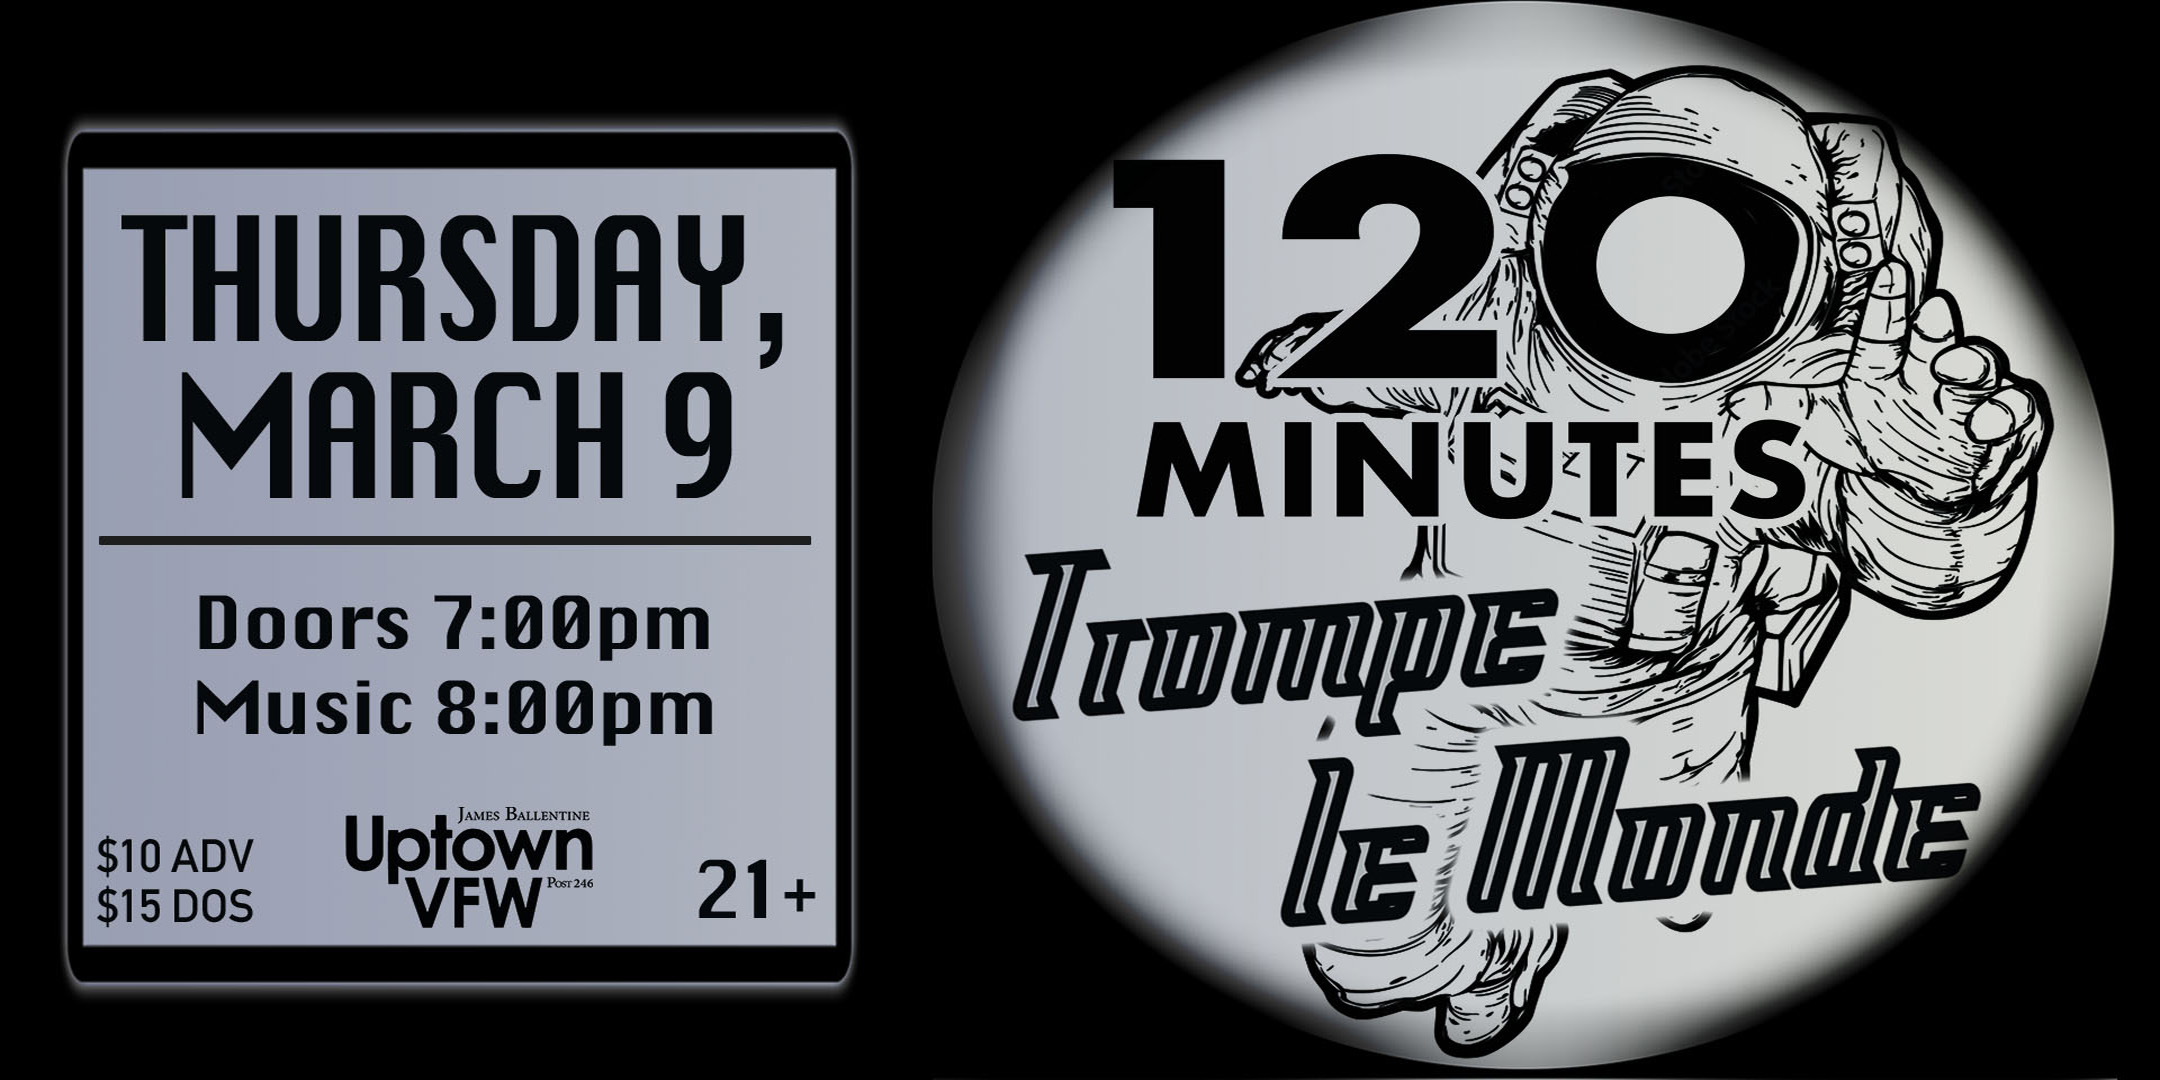 120 Minutes Band Trompe le Monde Thursday March 9 James Ballentine "Uptown" VFW Post 246 Doors 7:00pm :: Music 8:00pm :: 21+ GA $10 ADV / $15 DOS NO REFUNDS